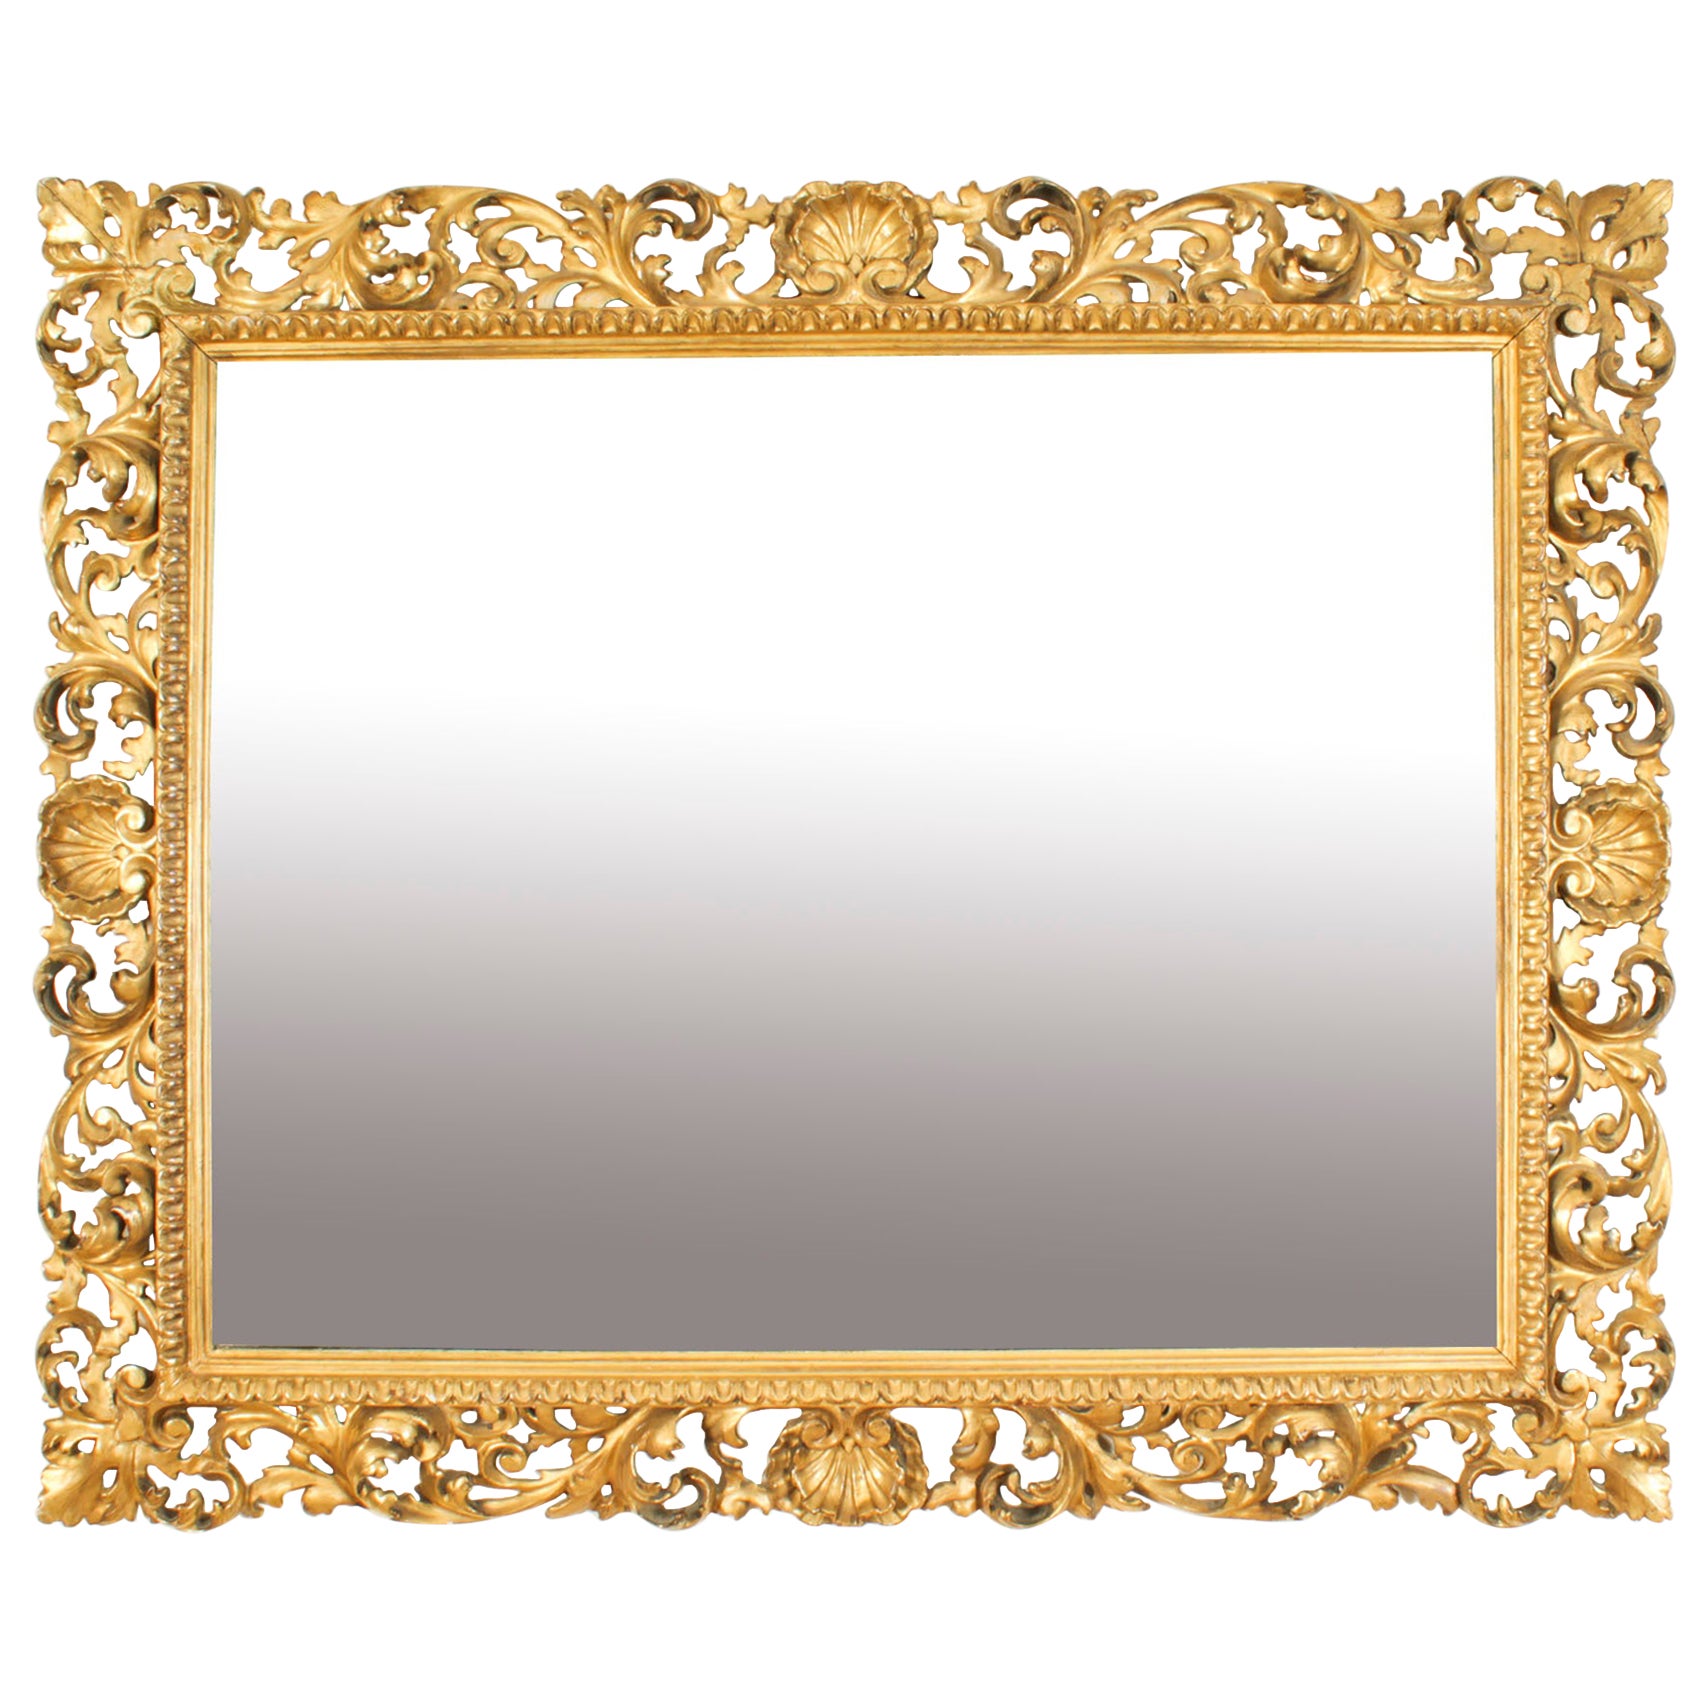 Antique Italian Giltwood Florentine Overmantle Mirror 19th Century - 86x102cm